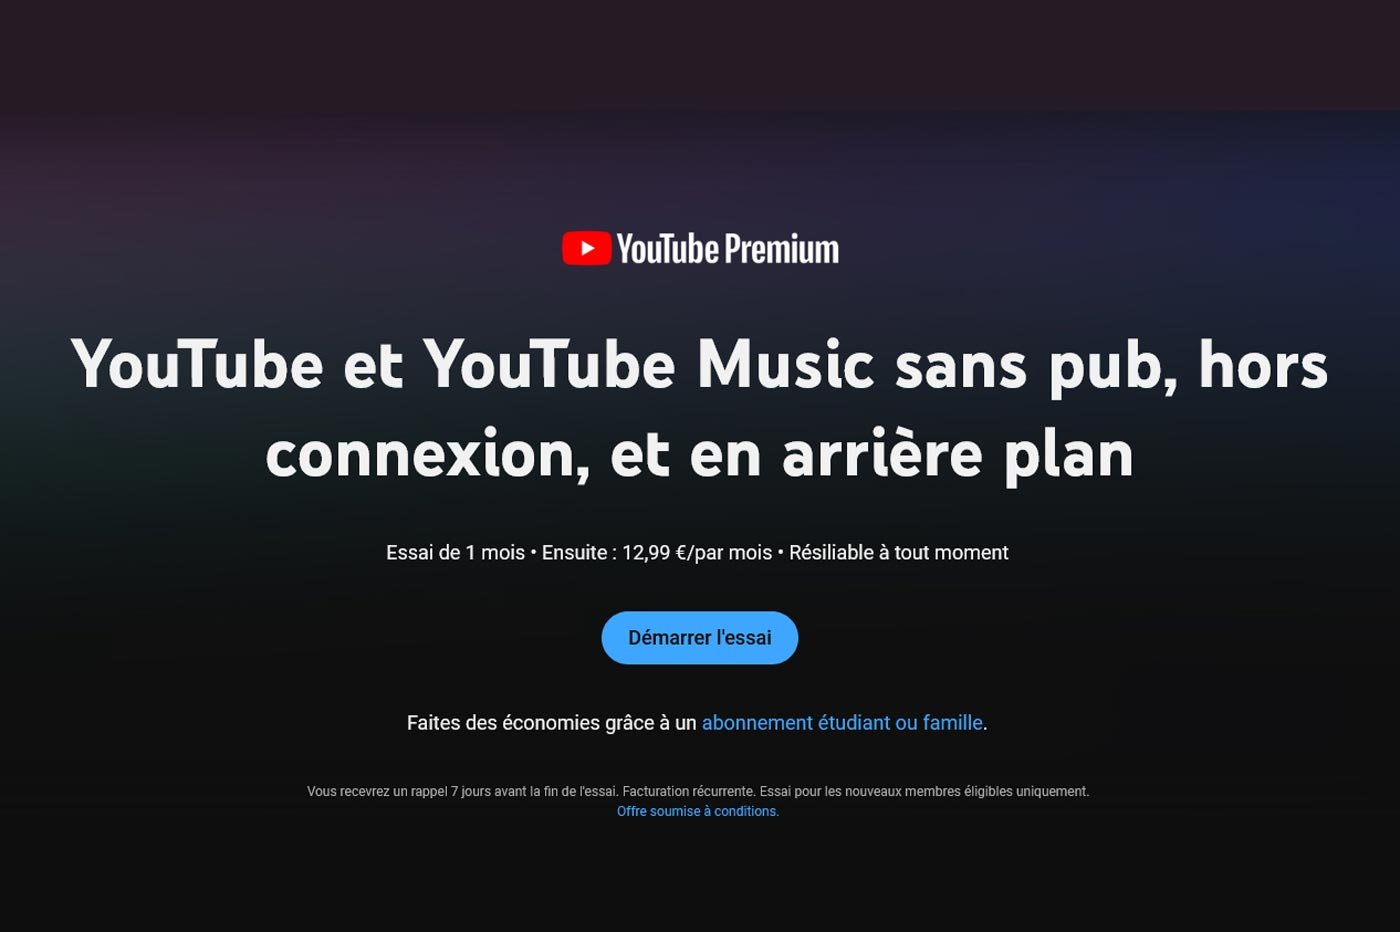 YouTube Premium augmentation France